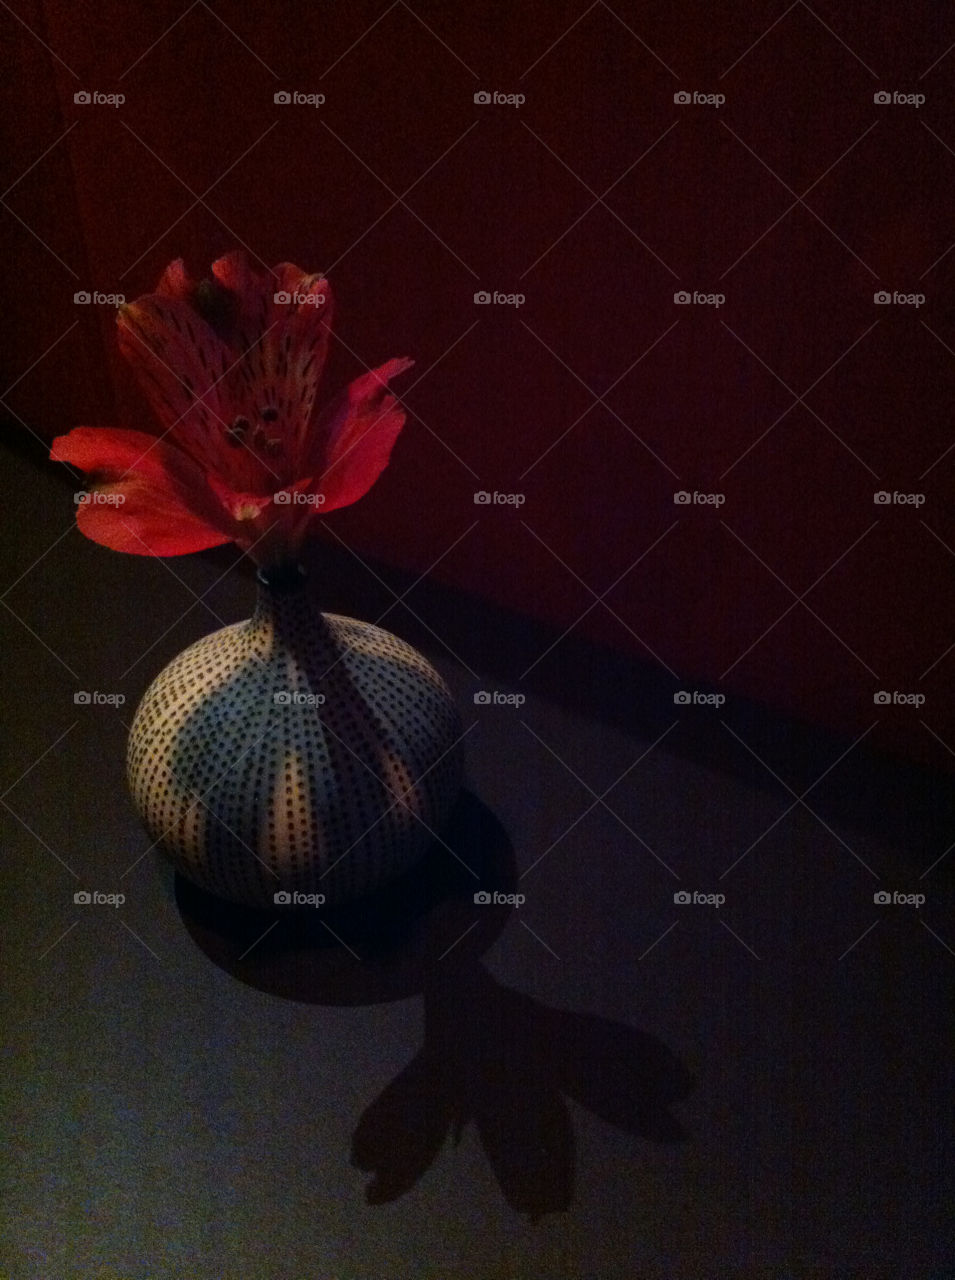 flower miss voon stockholm by Tinhul